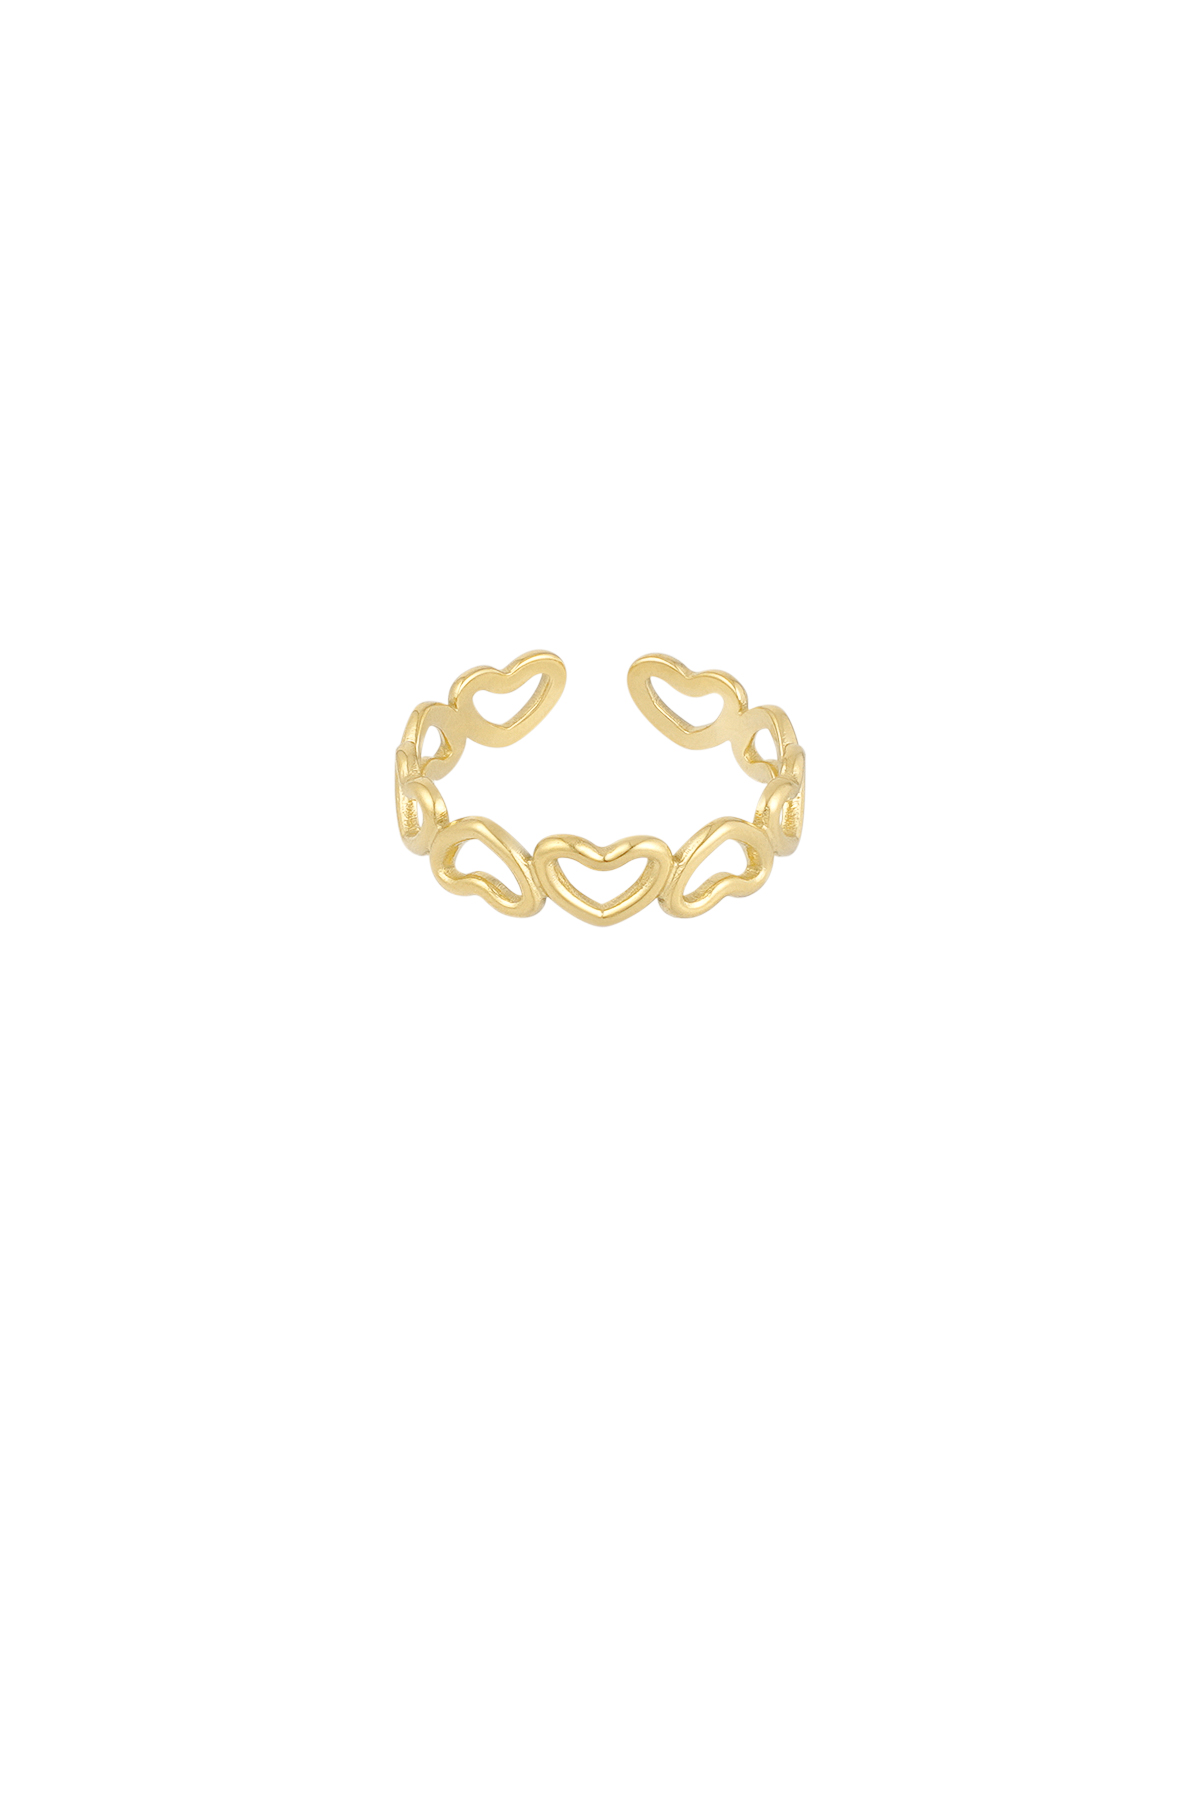 Ring „Love“ – Gold 